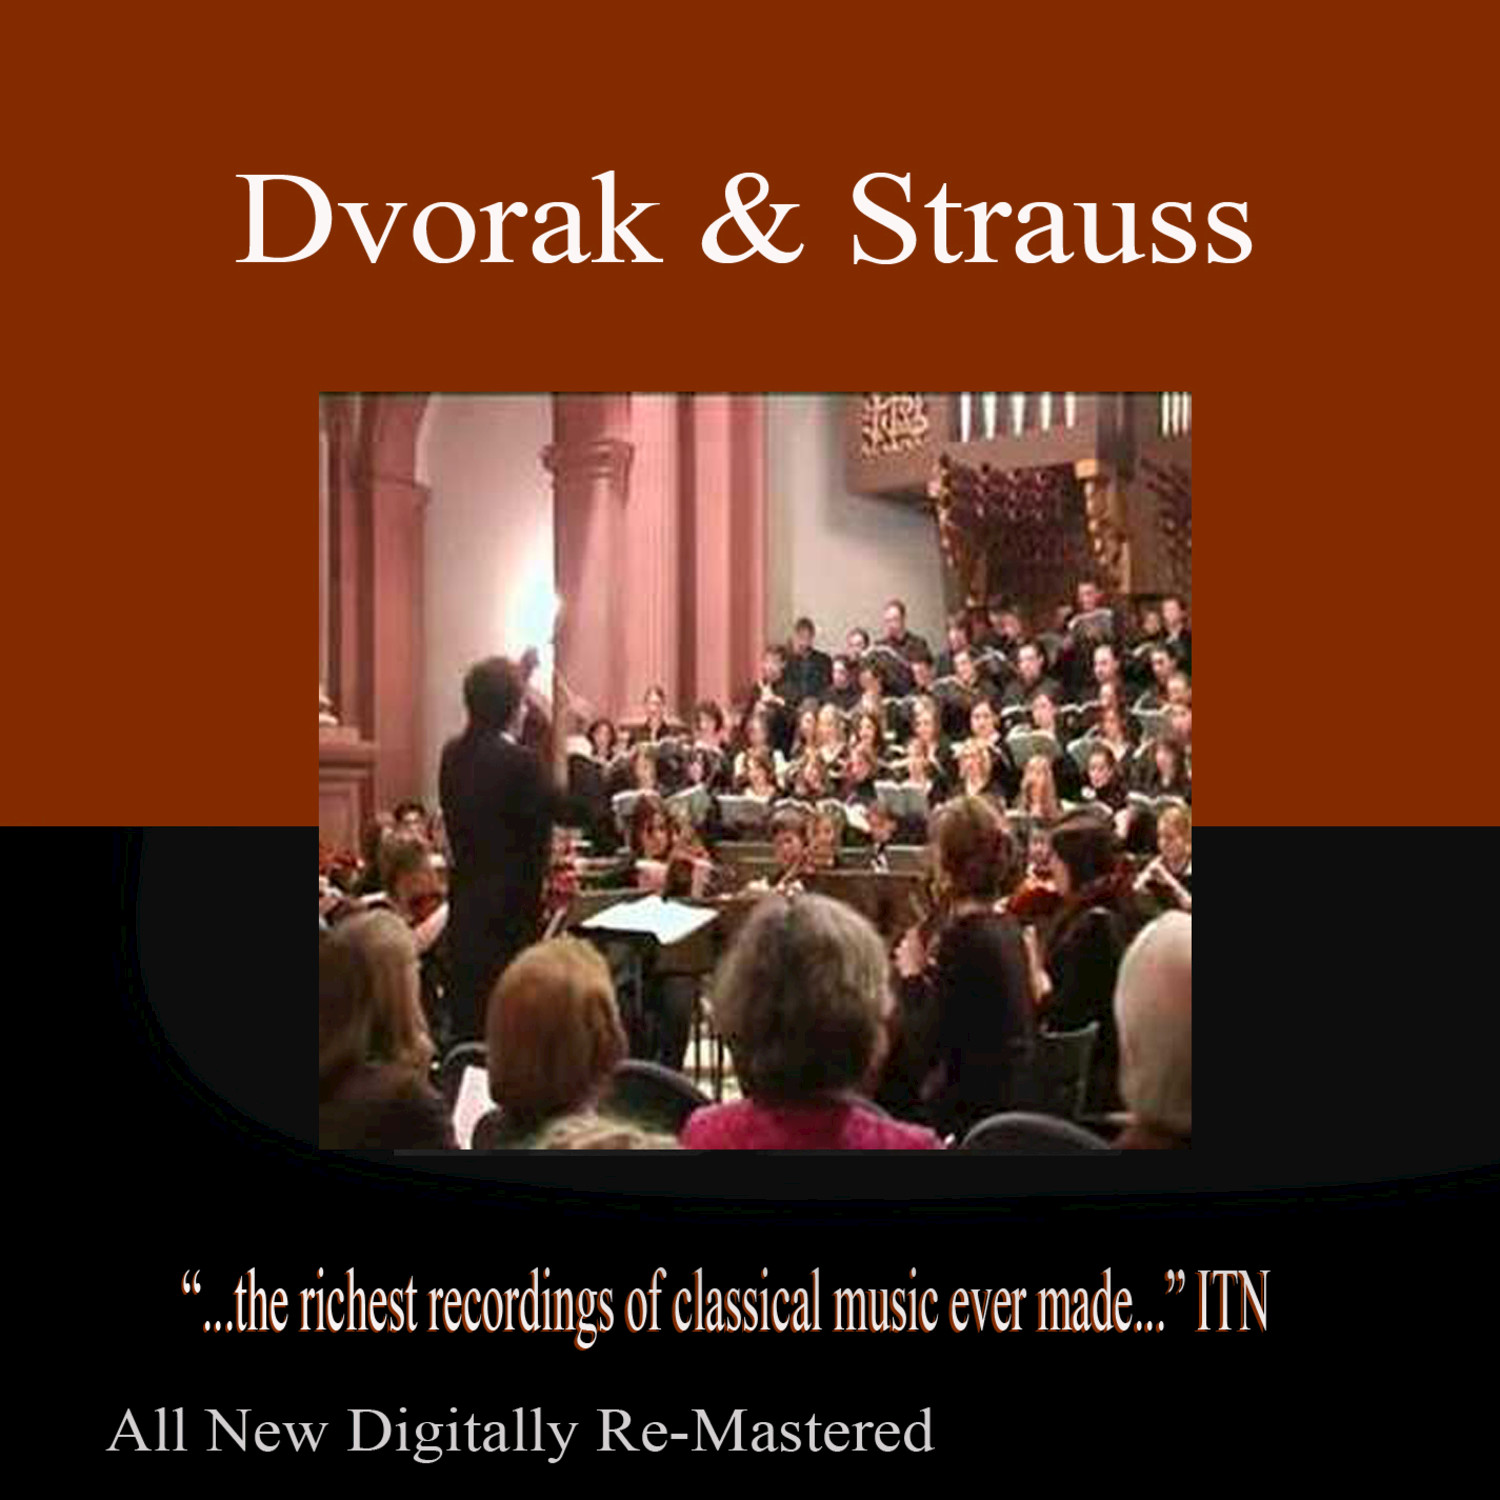 Dvorak & Strauss